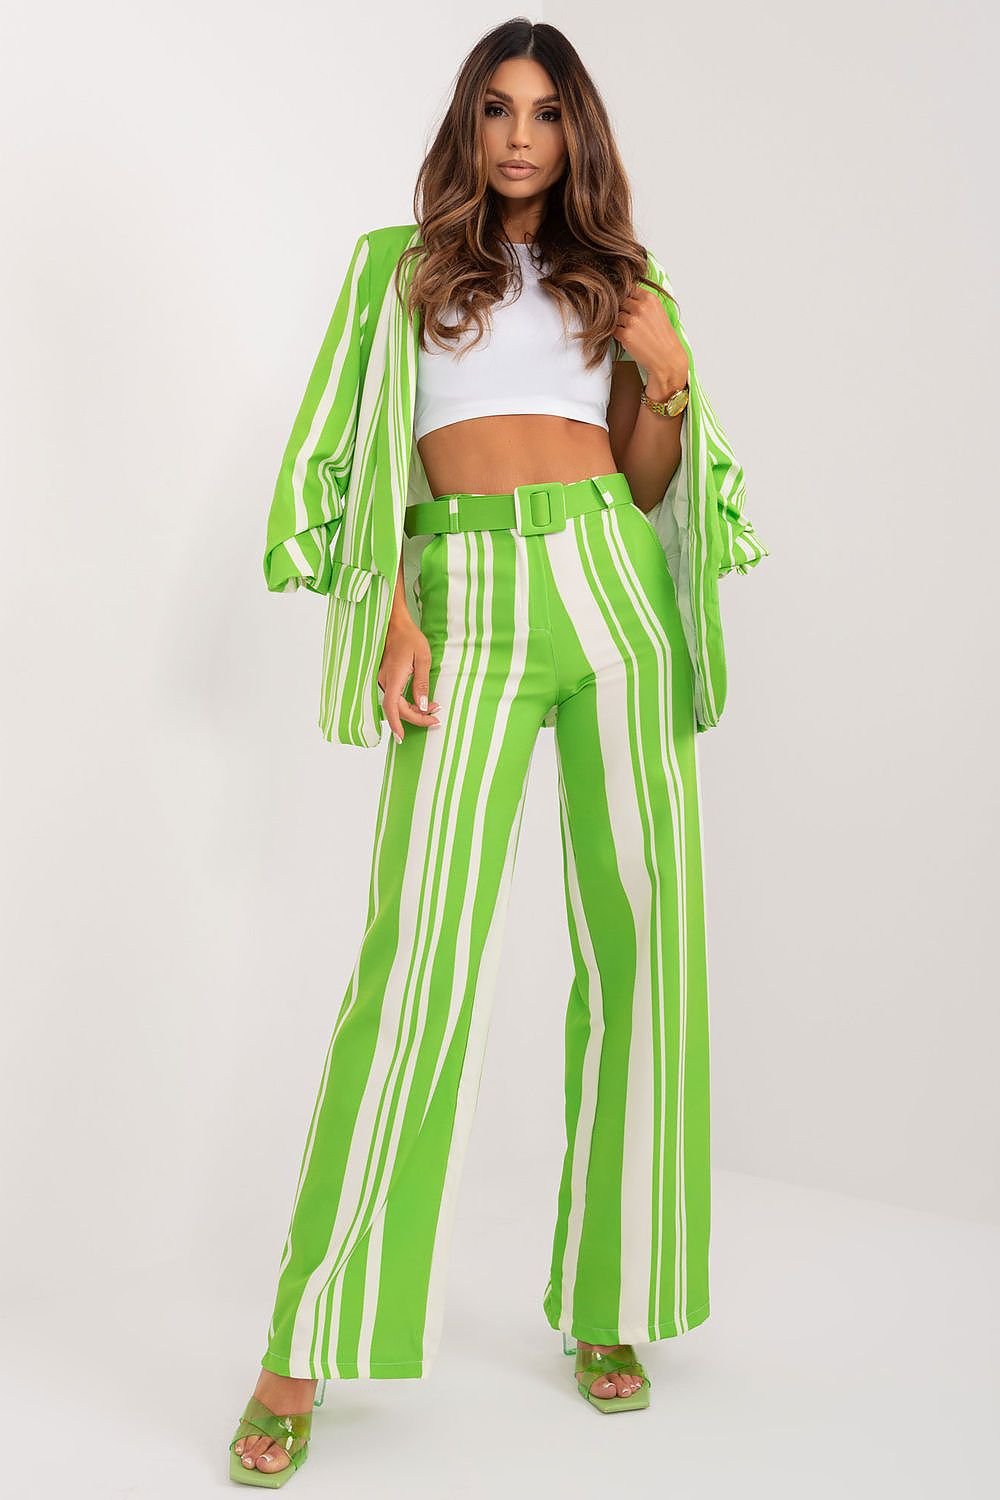 TEEK - Candy Stripe Trousers PANTS TEEK MH green L 